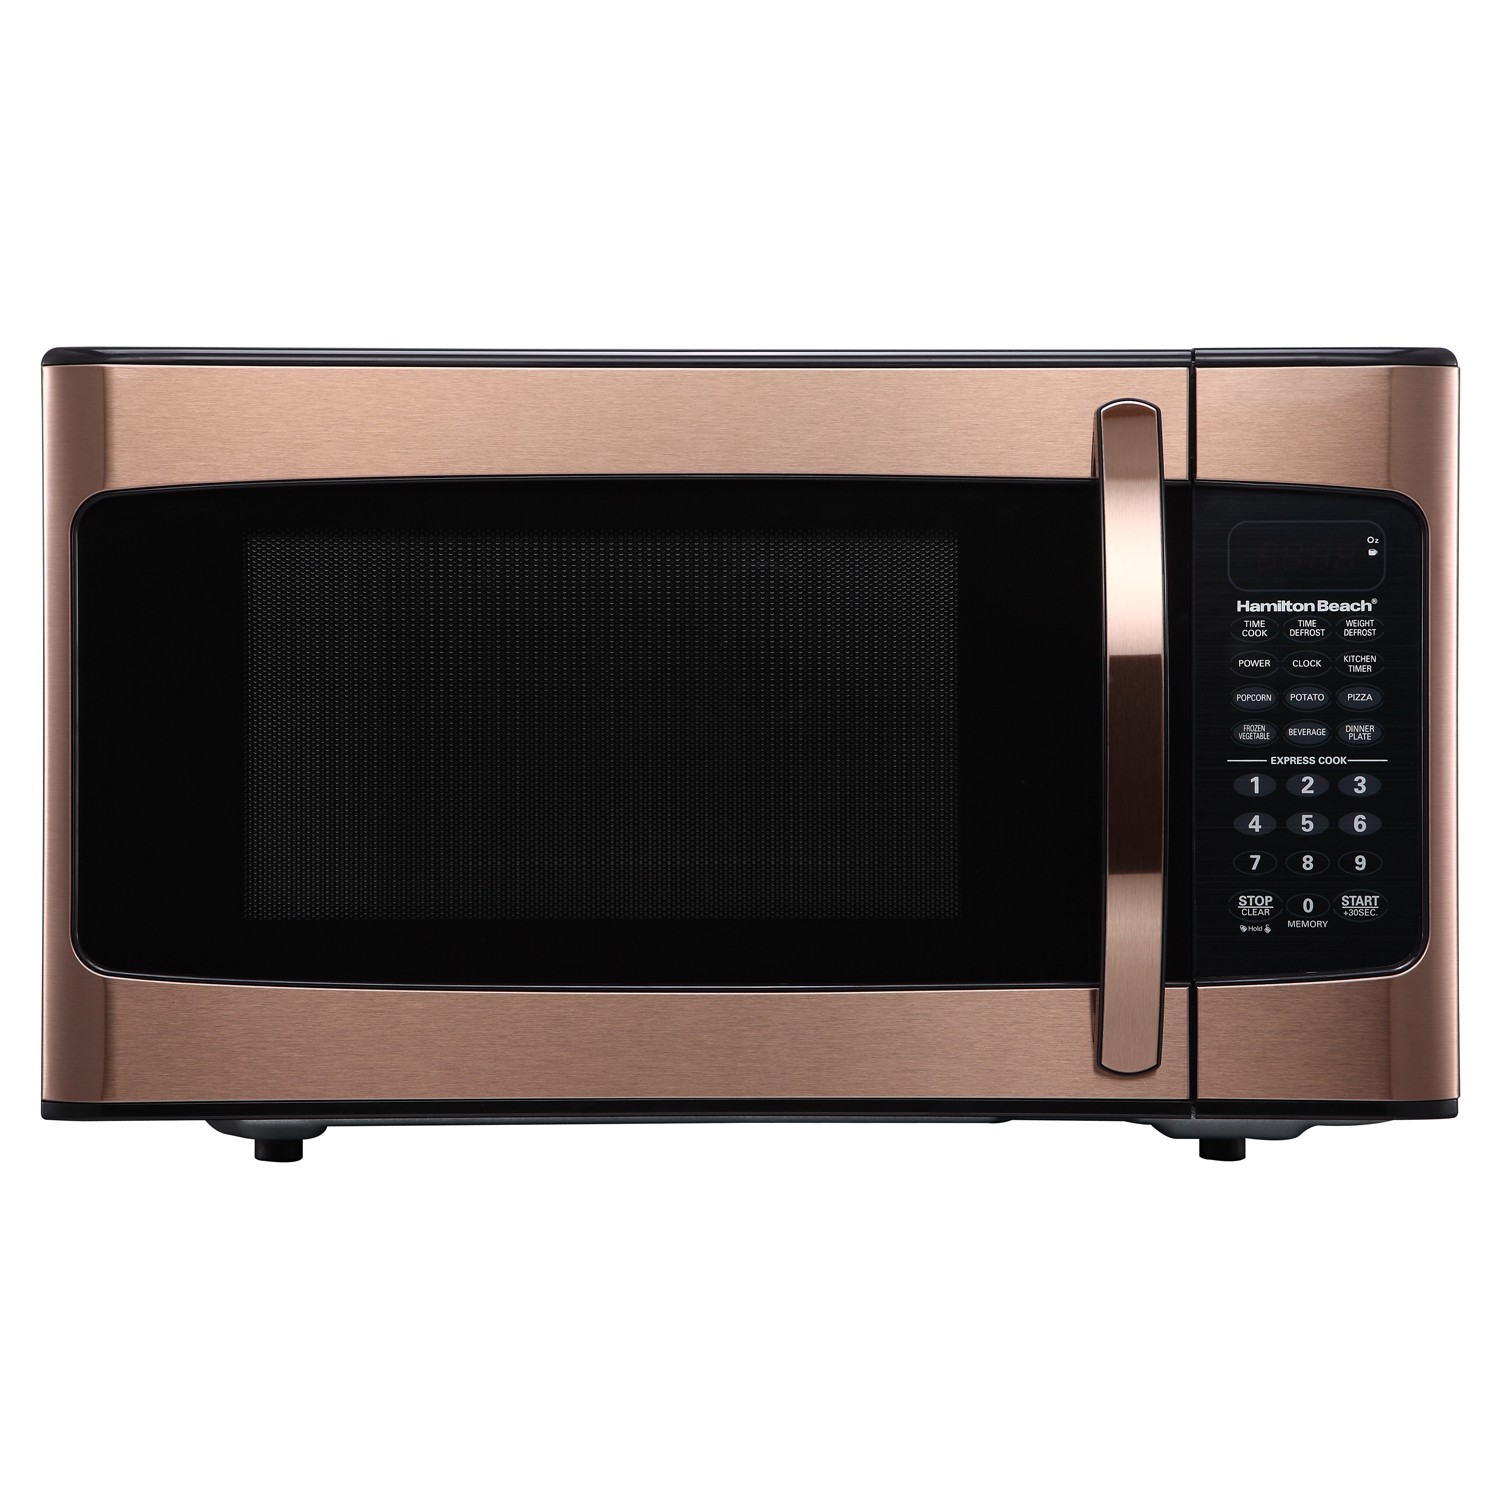 Hamilton beach 1 1 cu ft microwave oven copper